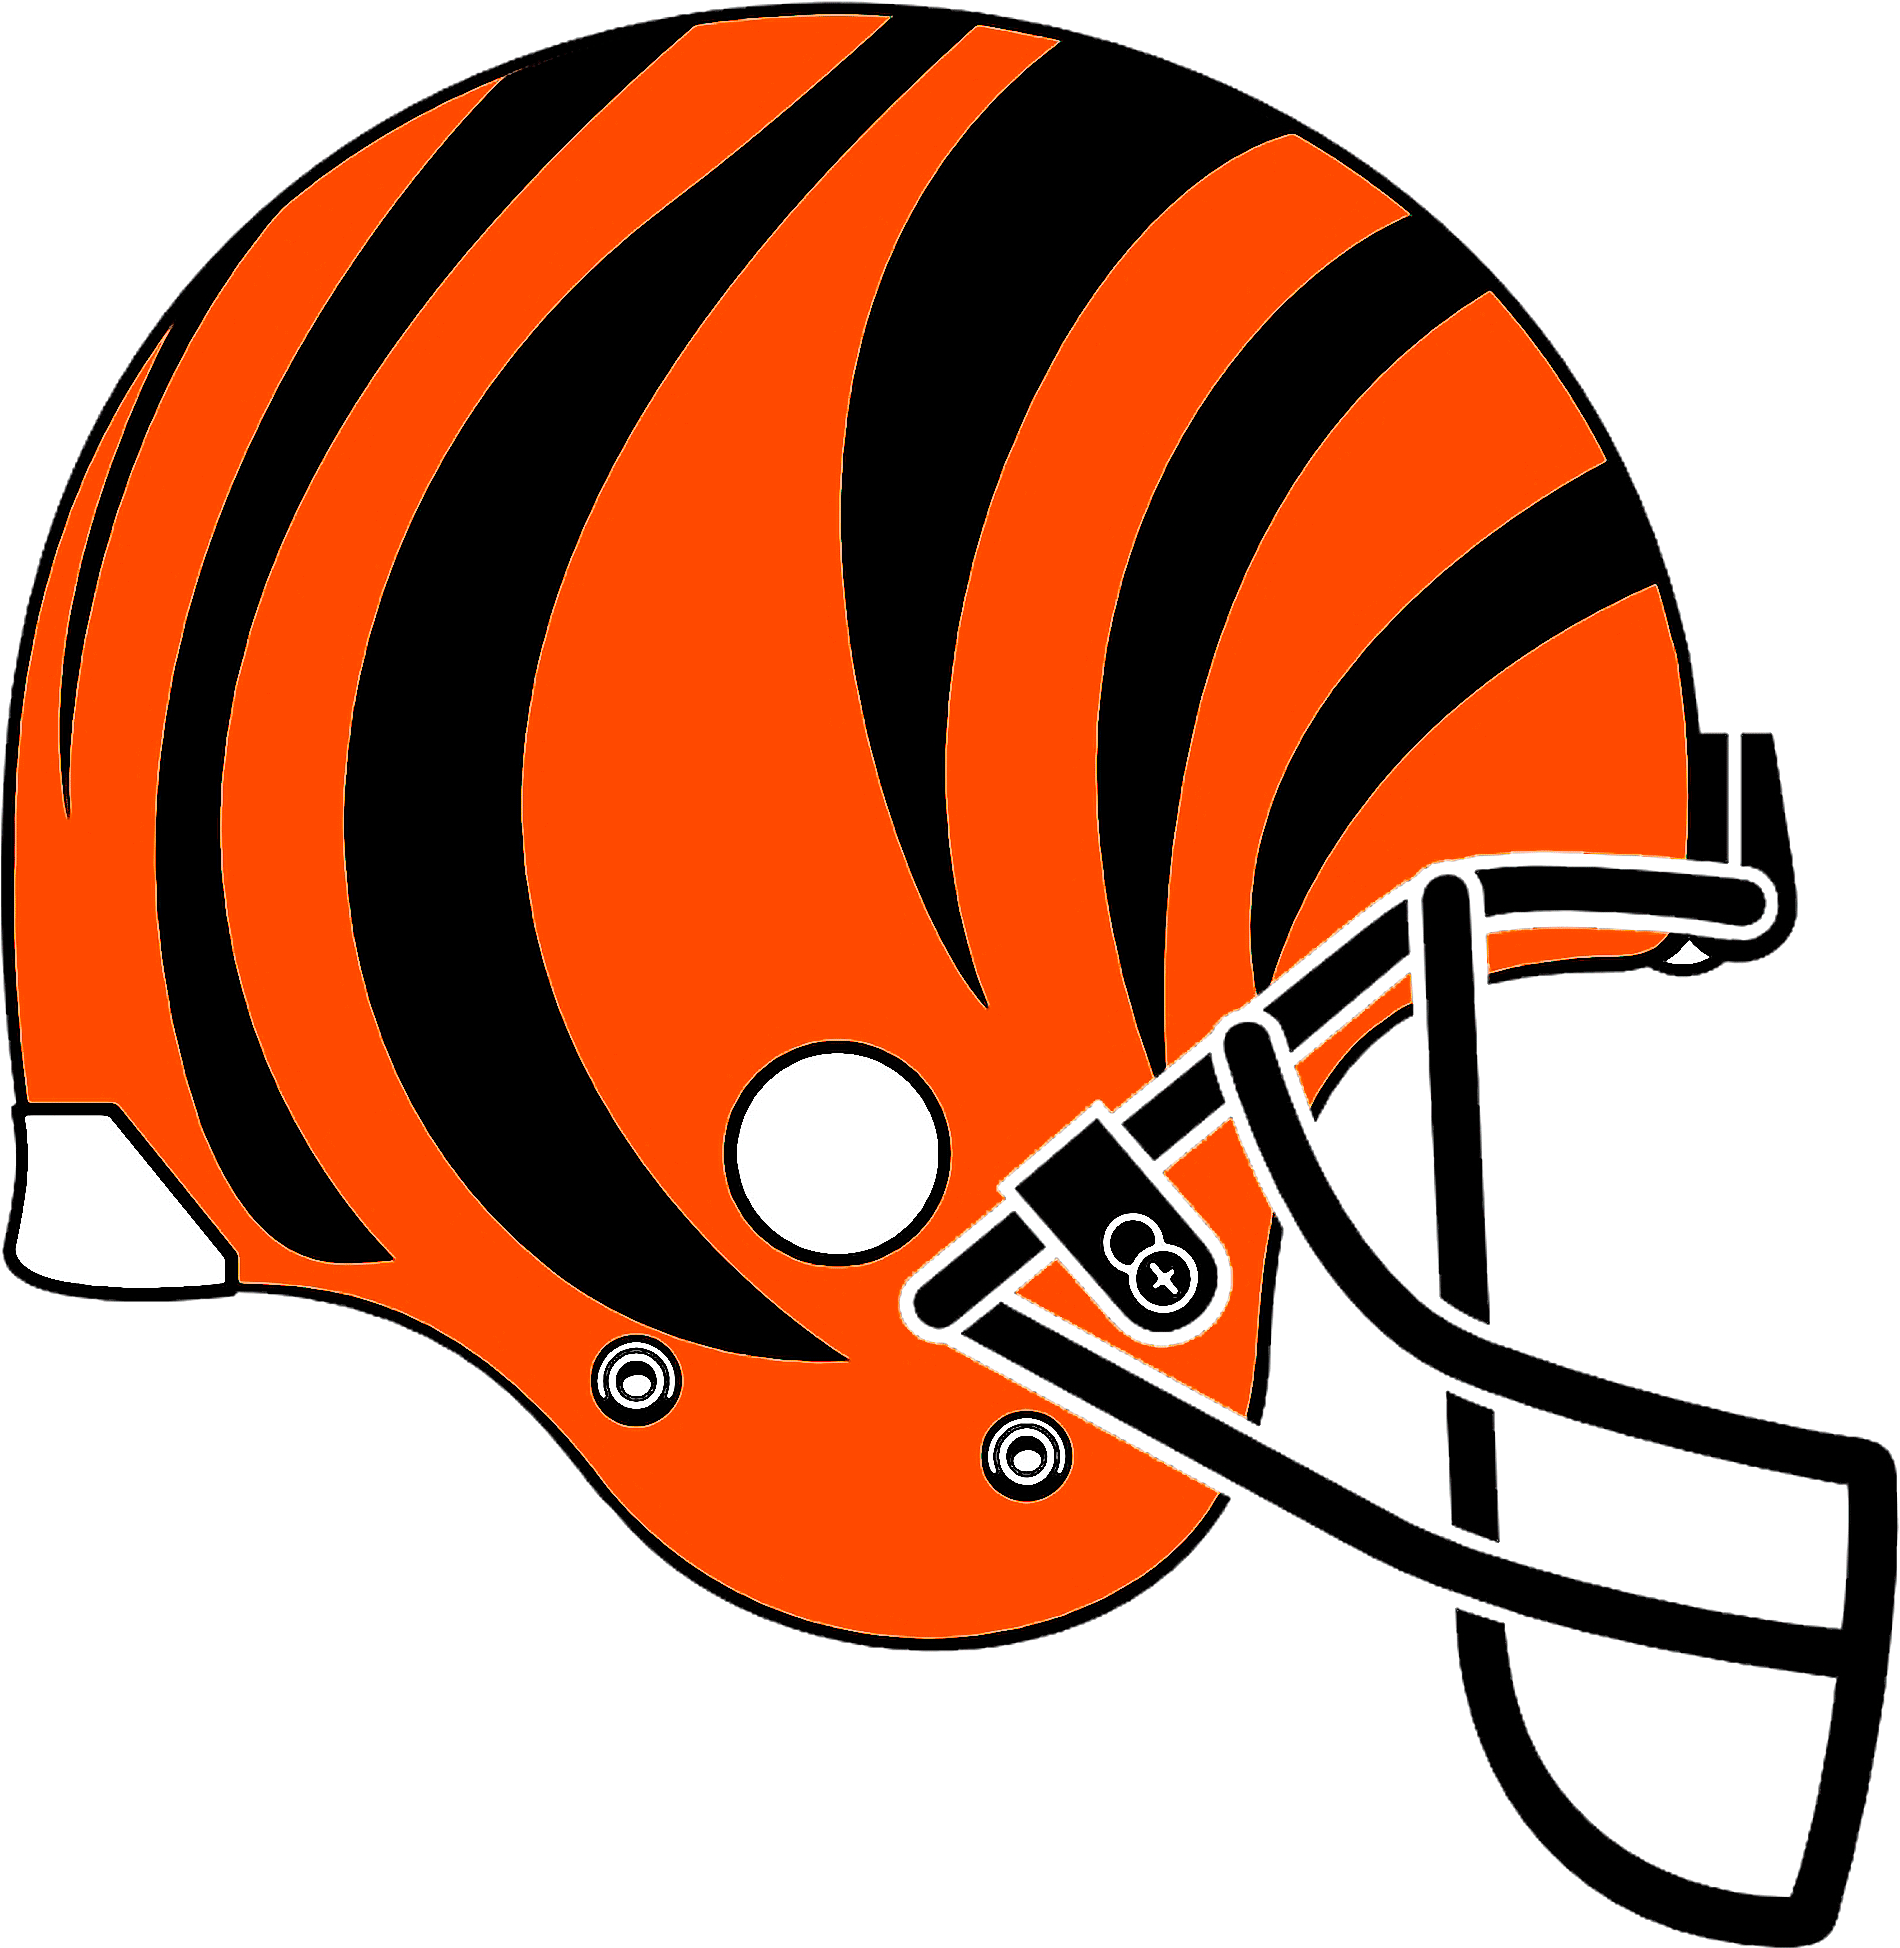 A Football Helmet With Black Stripes